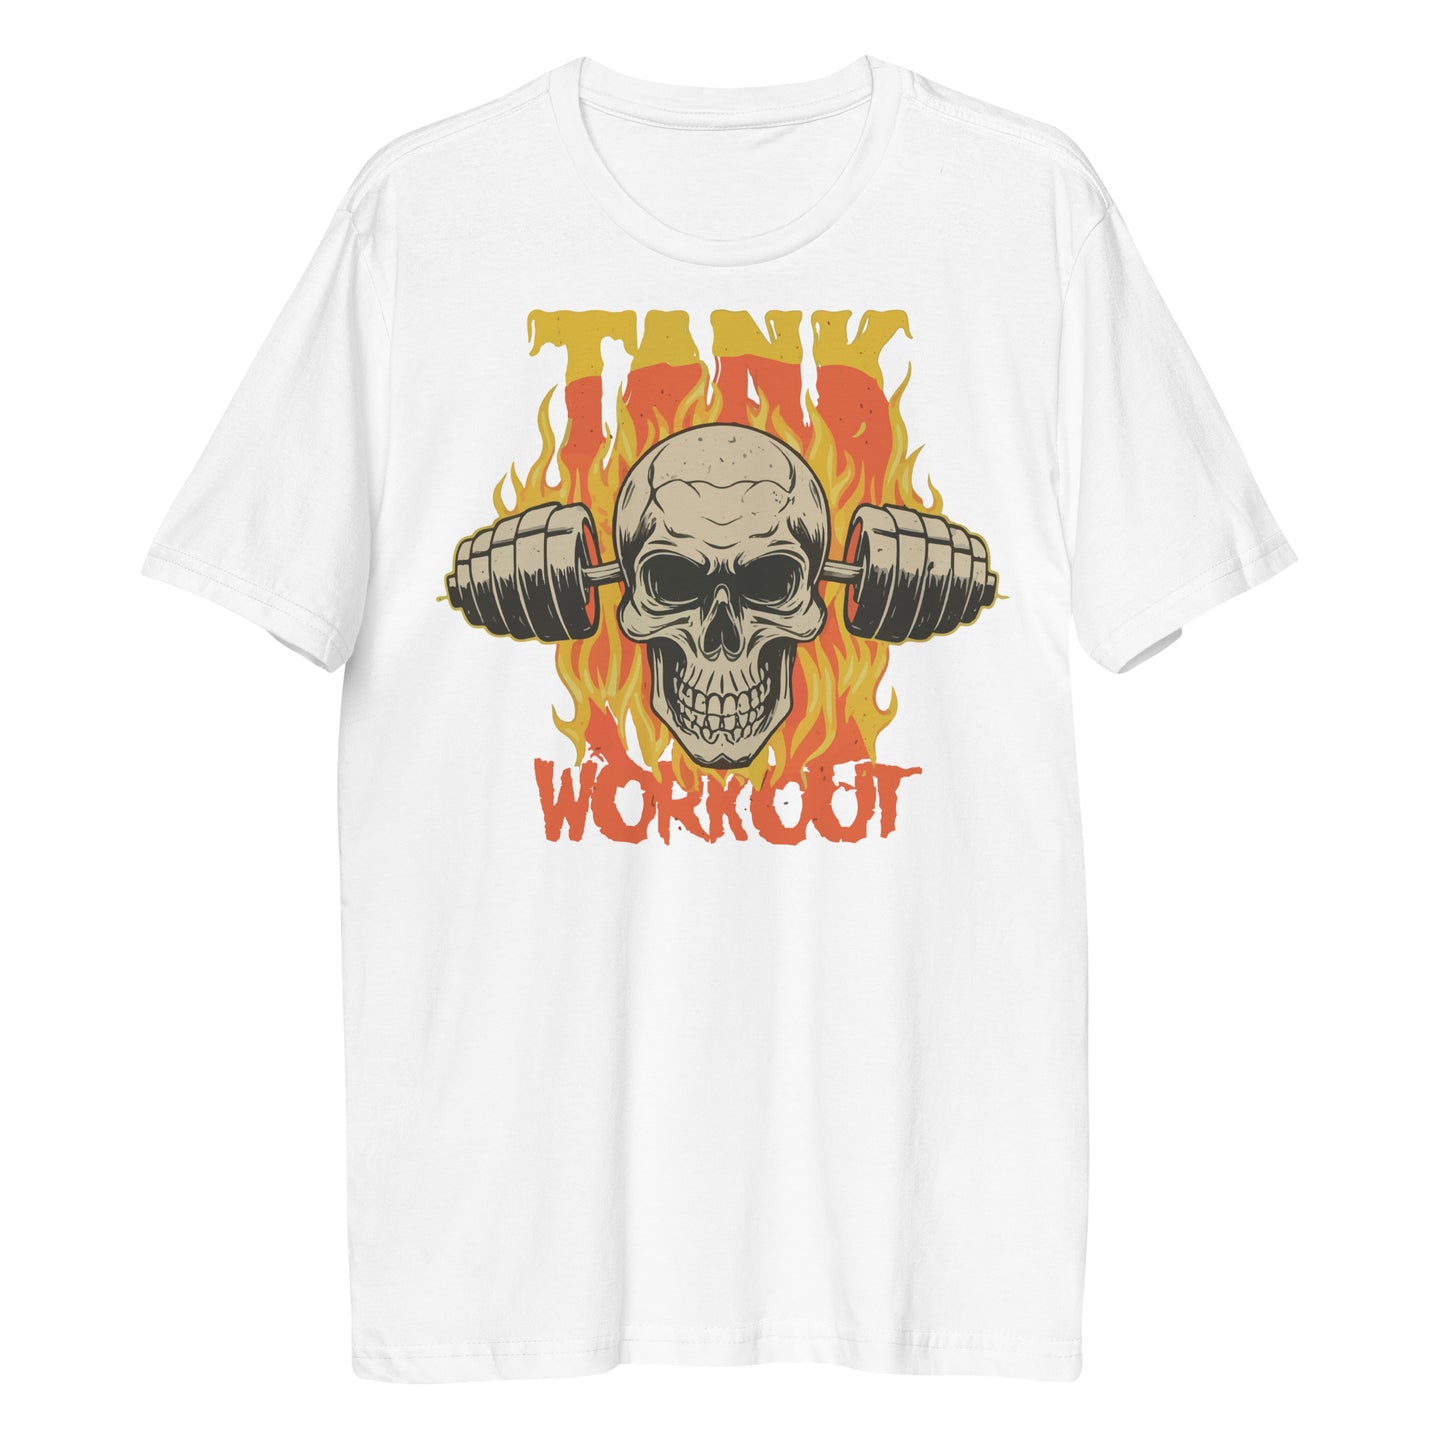 Camiseta Tank Workout